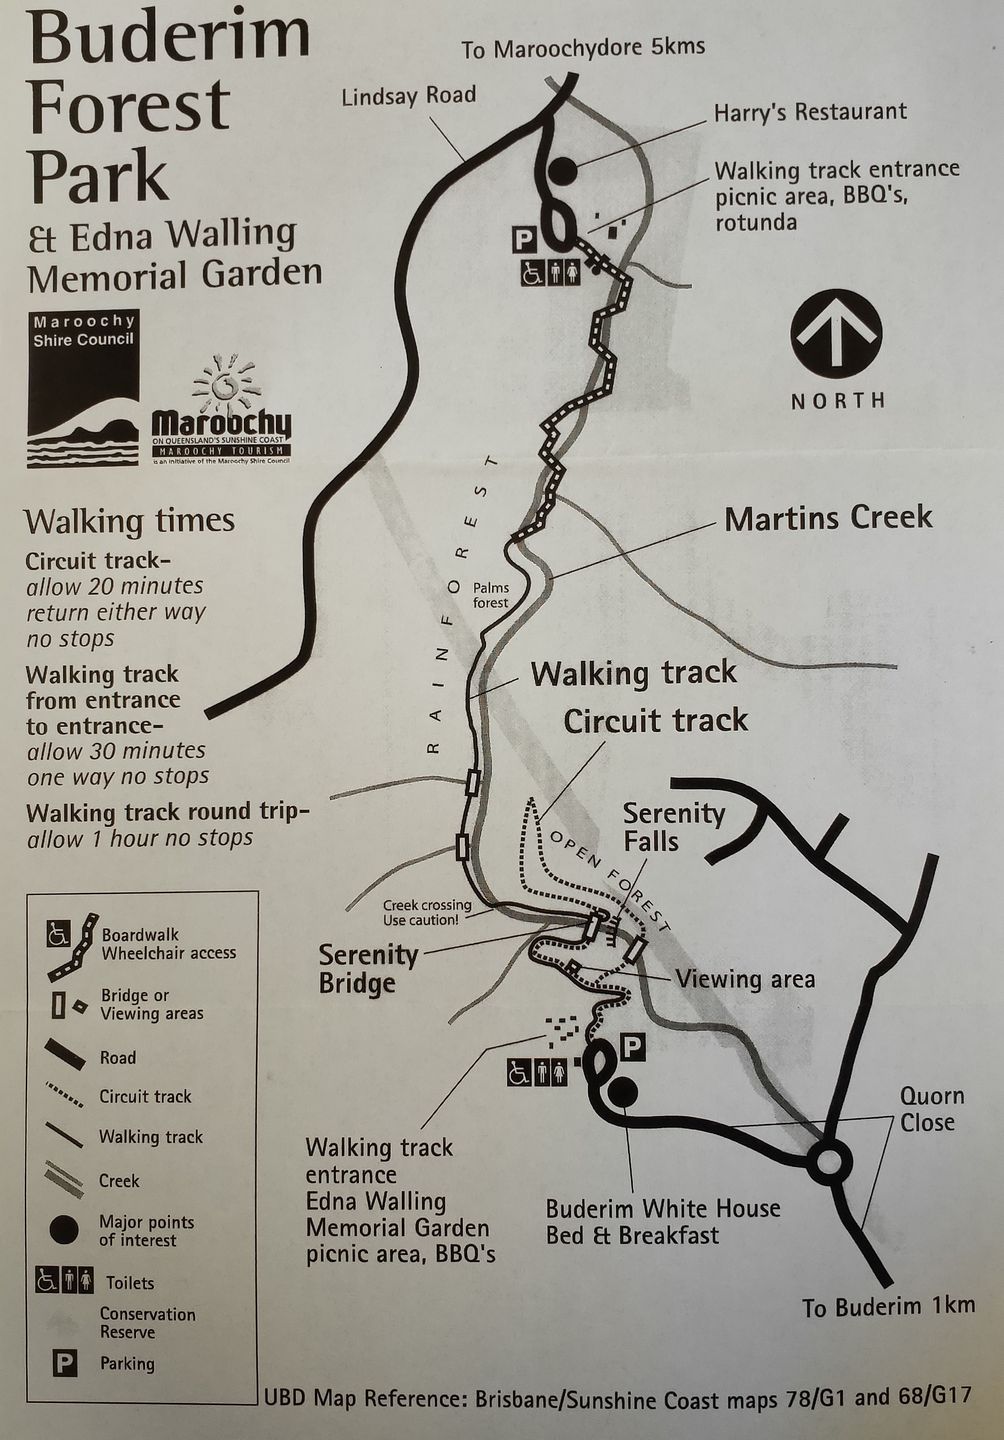 Buderim Forest Park - Walking Map, Waterfall, Boardwalk, Dogs, BBQs, QLD